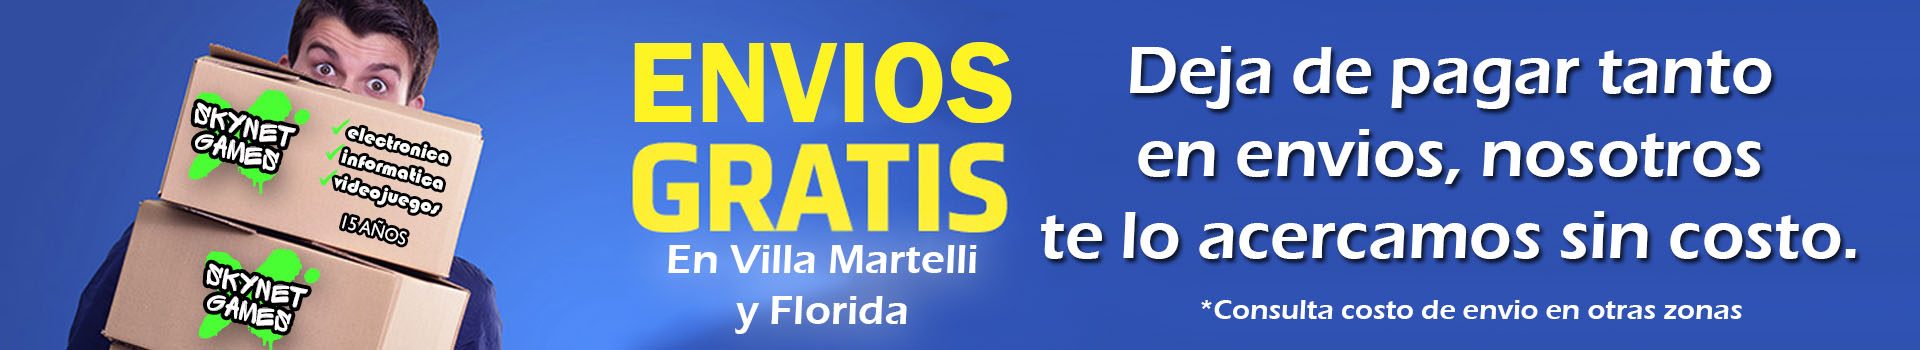 03 PORTADA ENVIOS GRATIS VILLA MARTELLI FLORIDA 1920X350 JPG